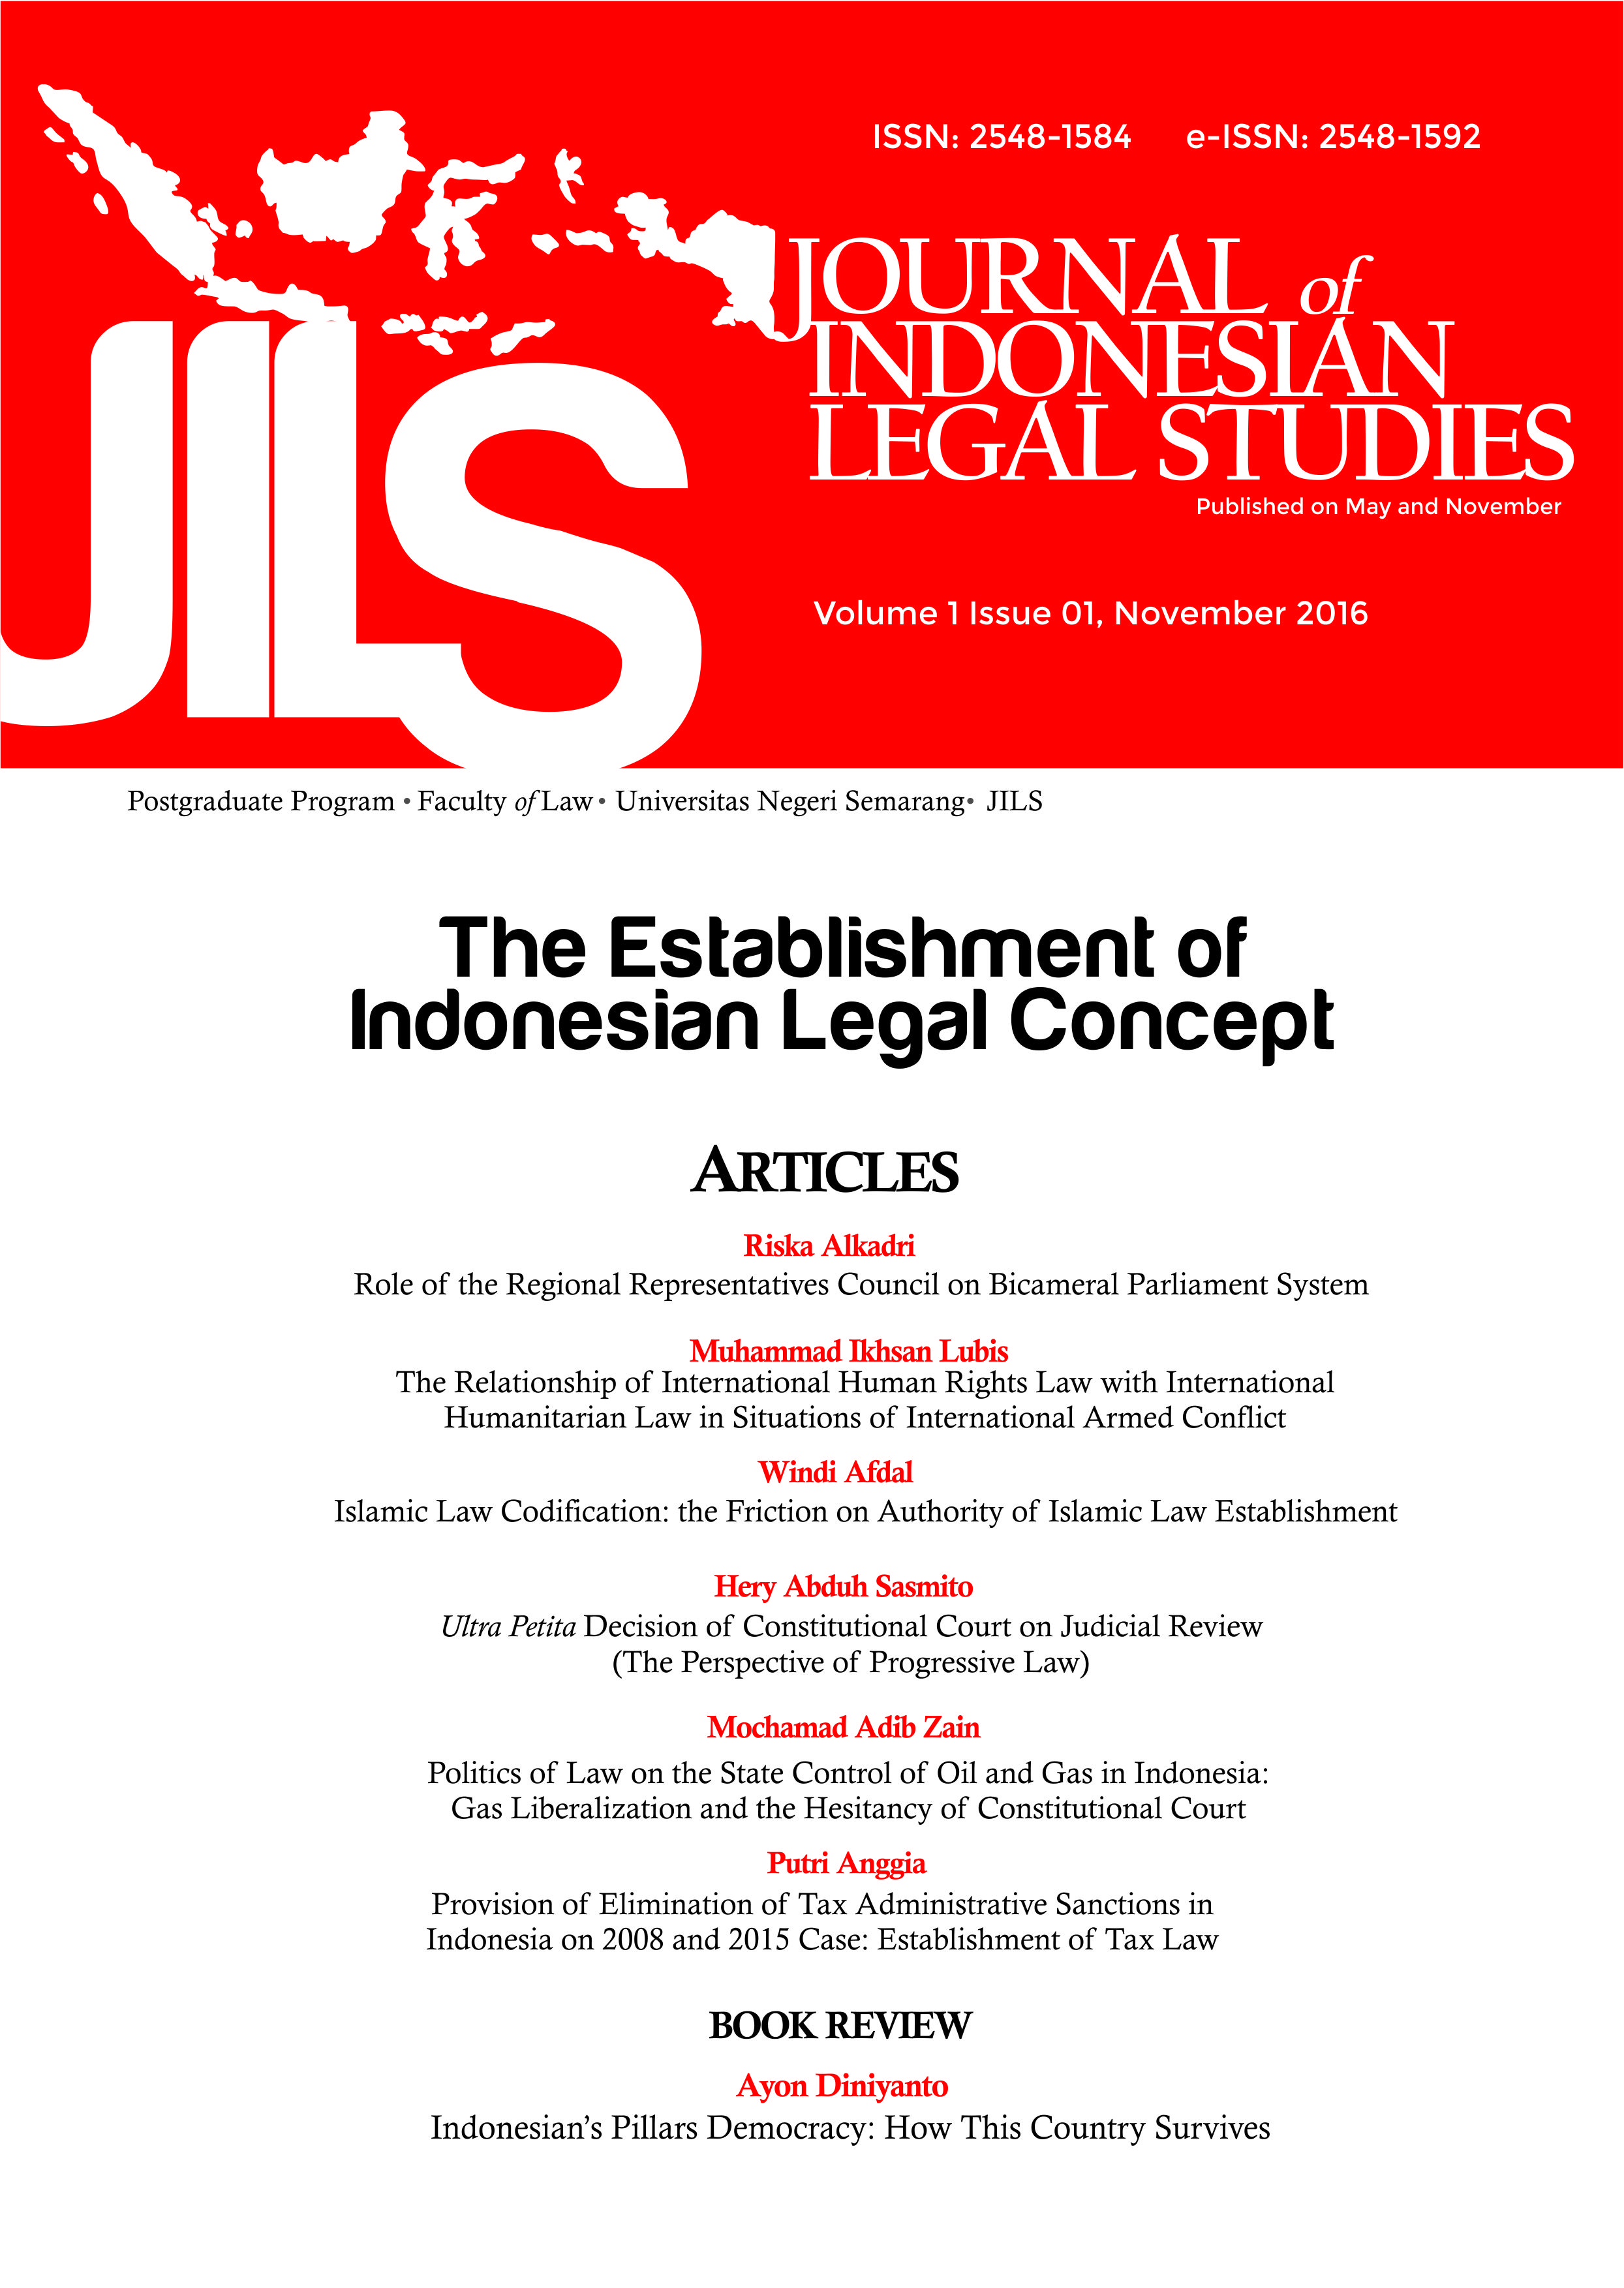 JILS, Indonesian Legal Studies, Legal Development